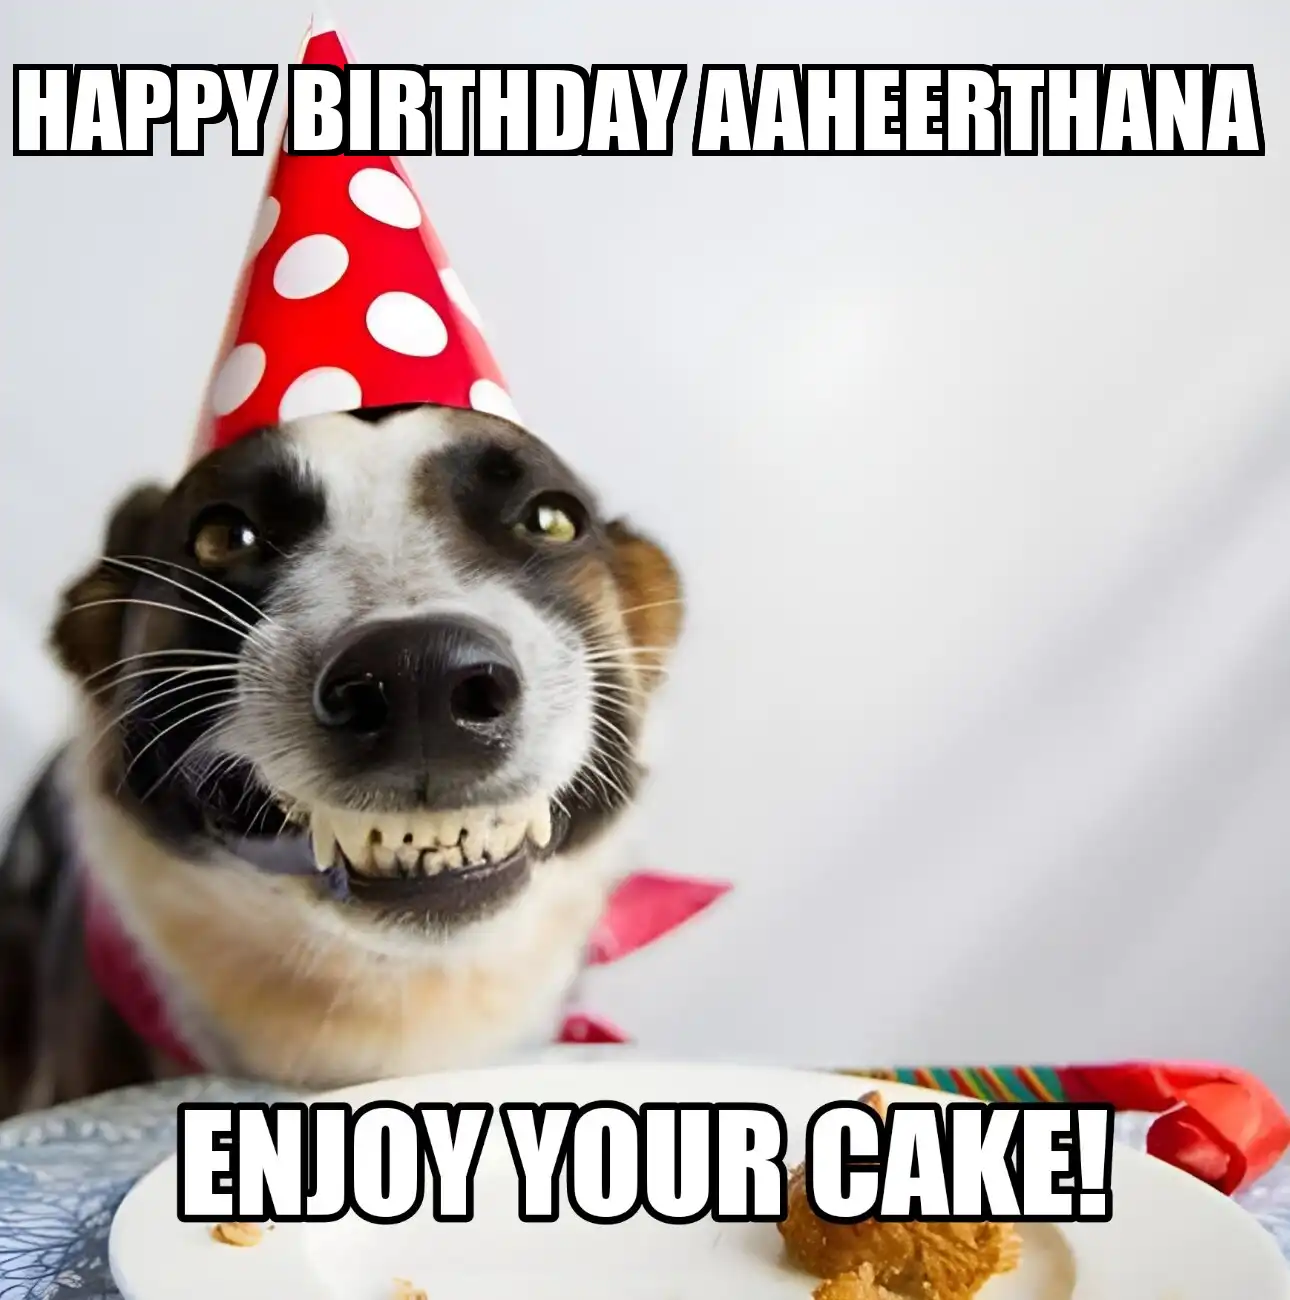 Happy Birthday Aaheerthana Enjoy Your Cake Dog Meme